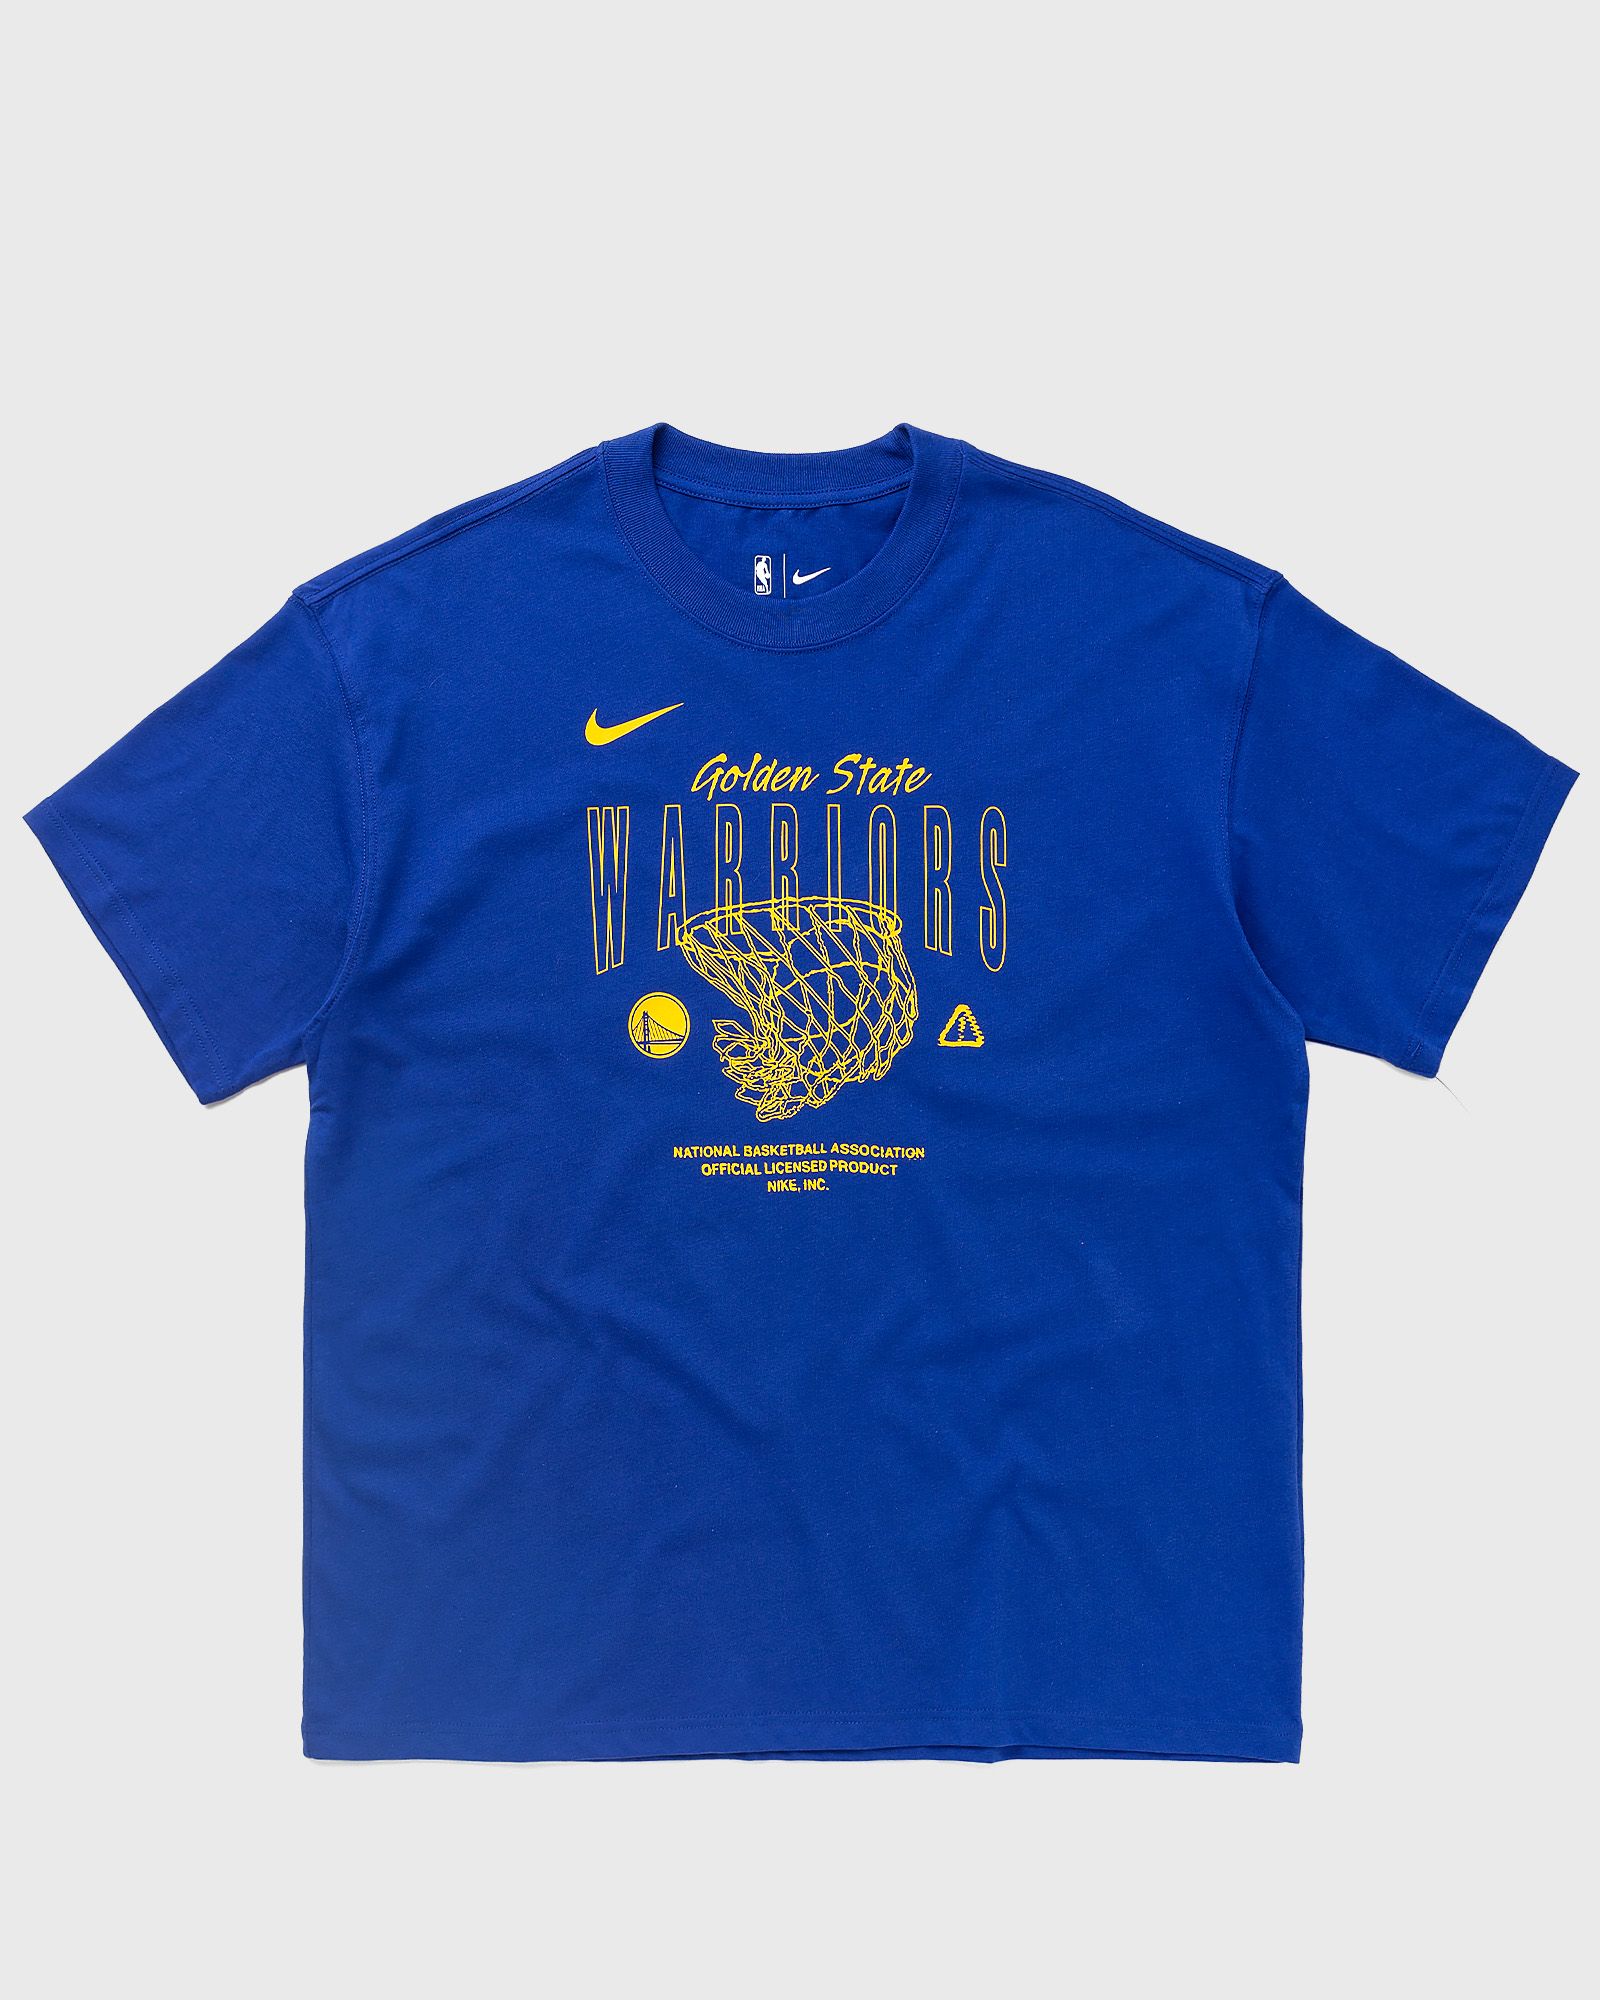 Nike - golden state warriors courtside max90 nba t-shirt men shortsleeves blue in größe:s